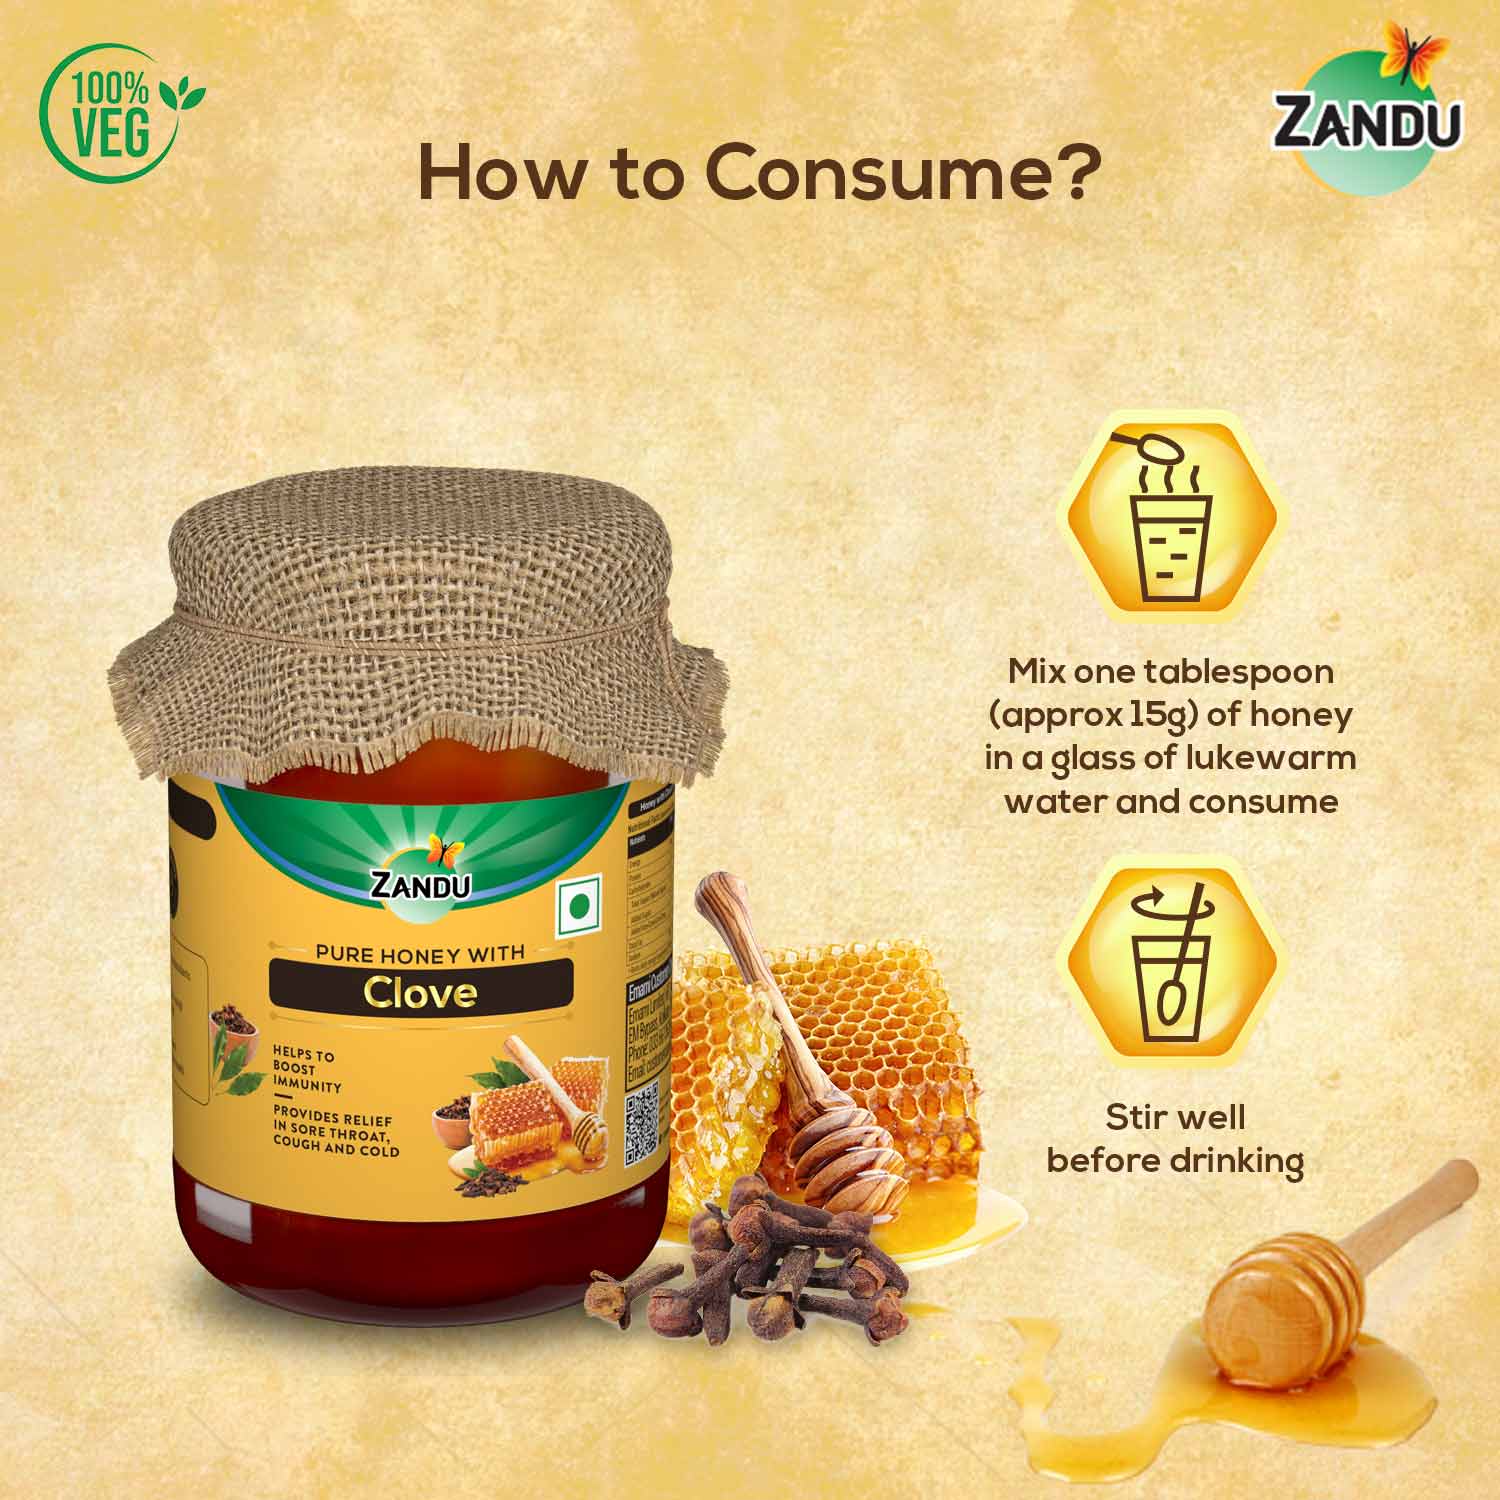 Zandu Pure Honey with Clove for Cough, Immunity & Cold (650g)